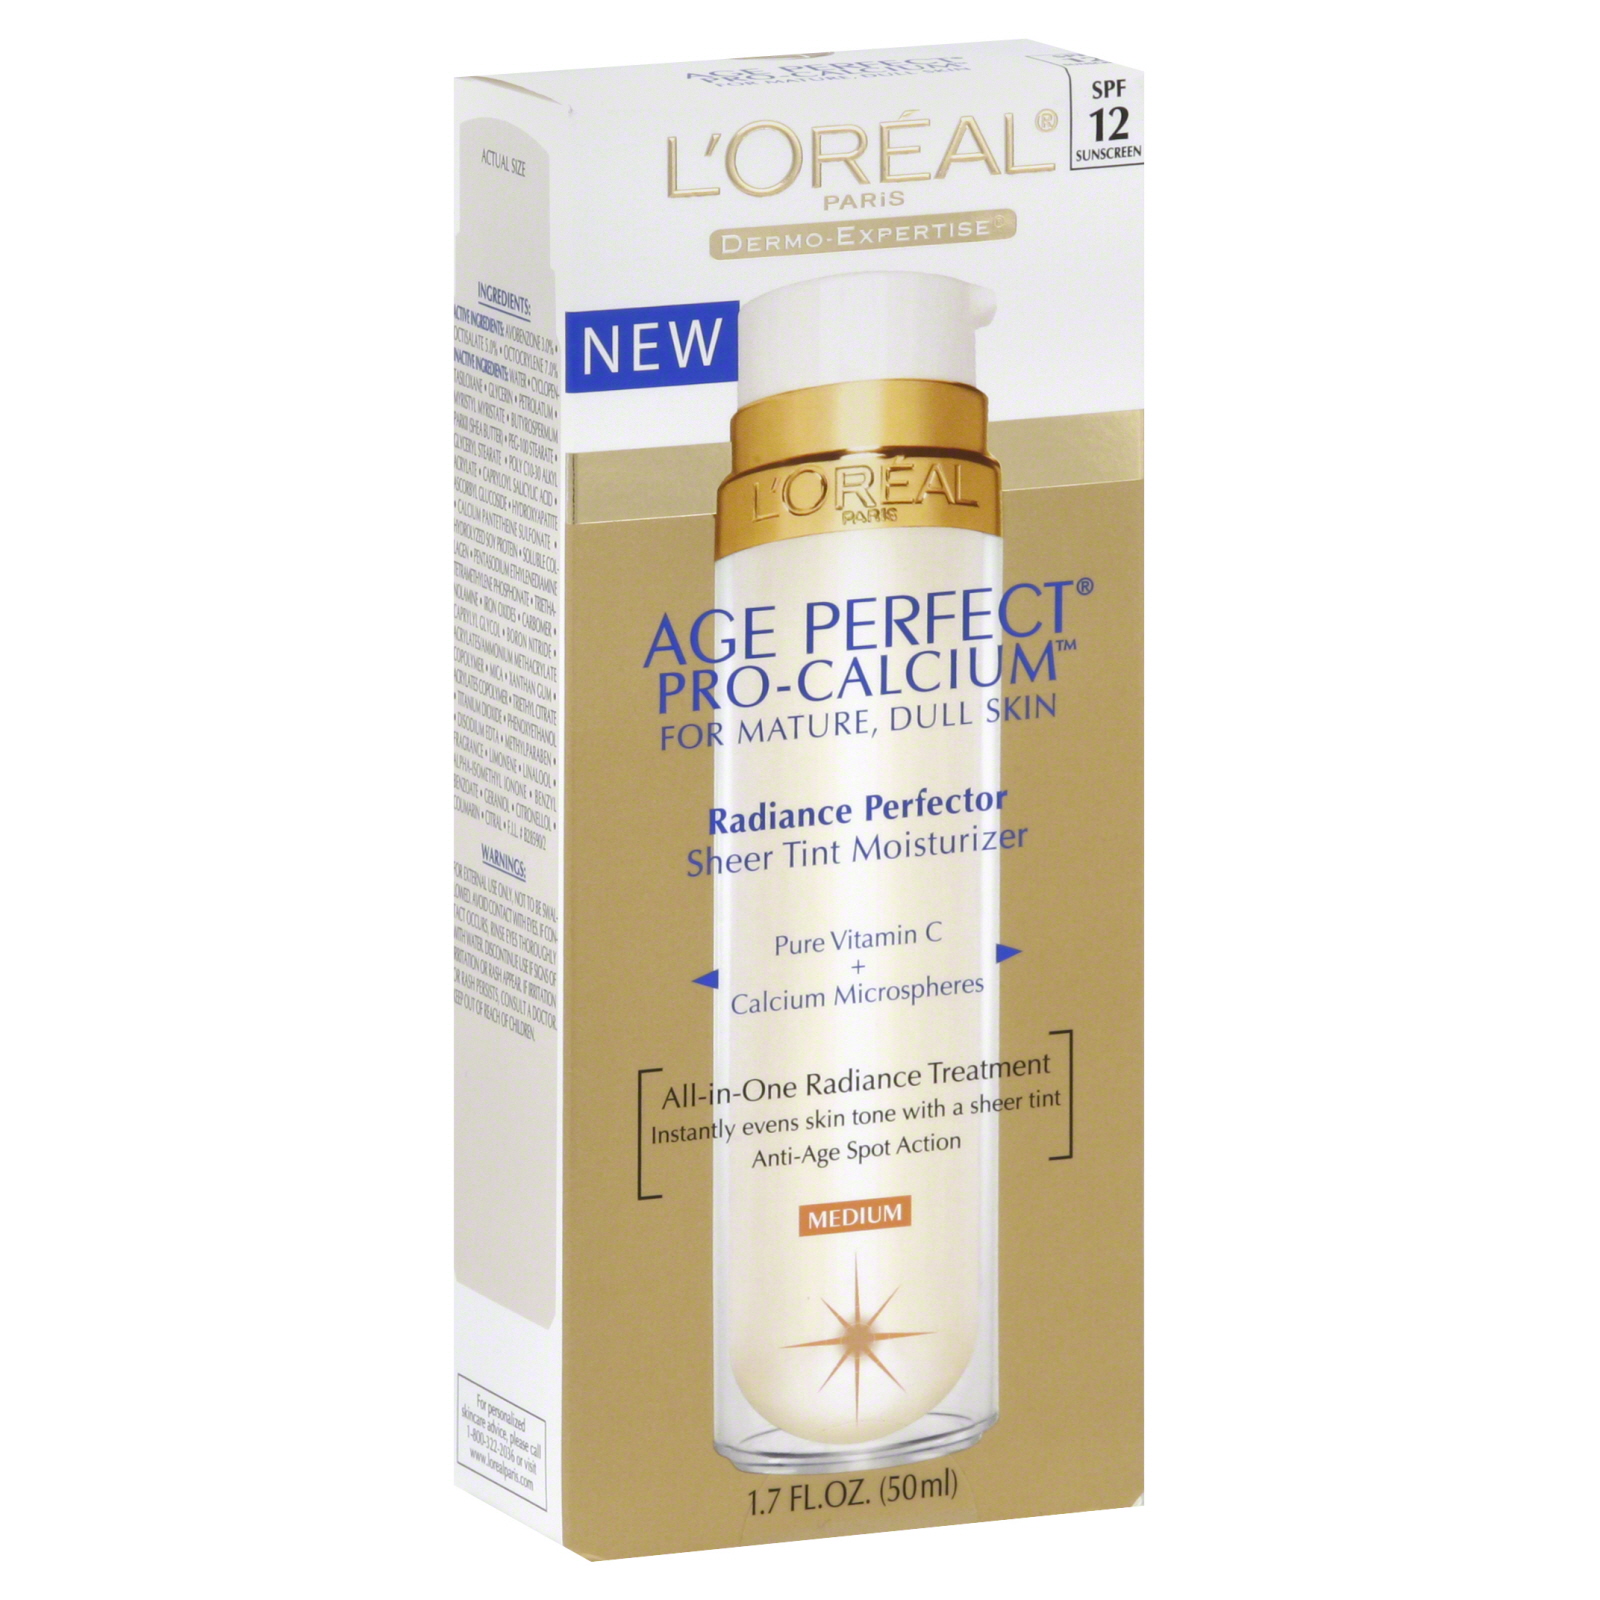 L'Oreal Age Perfect Pro-Calcium Radiance Perfector Sheer Tint Moisturizer for Mature, Dull Skin, Medium, 1.7 fl oz (50 ml)